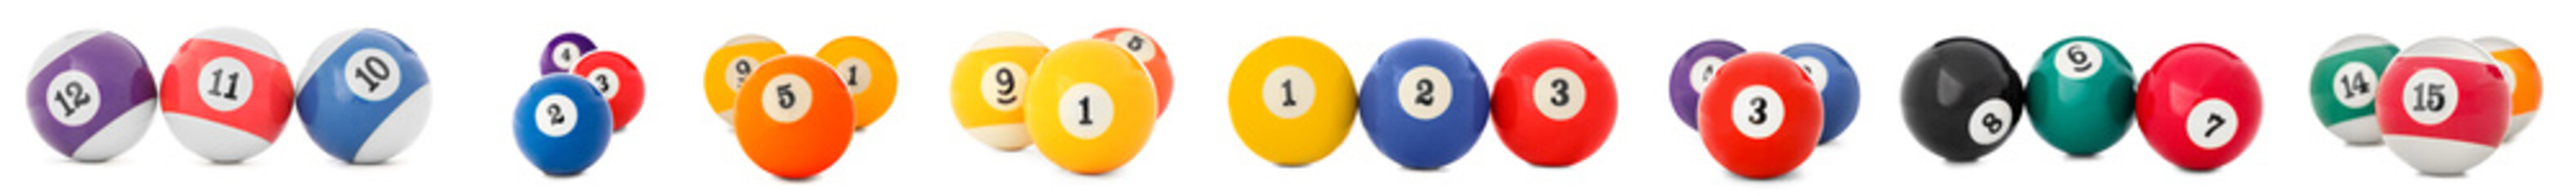 Set of billiard balls isolated on white